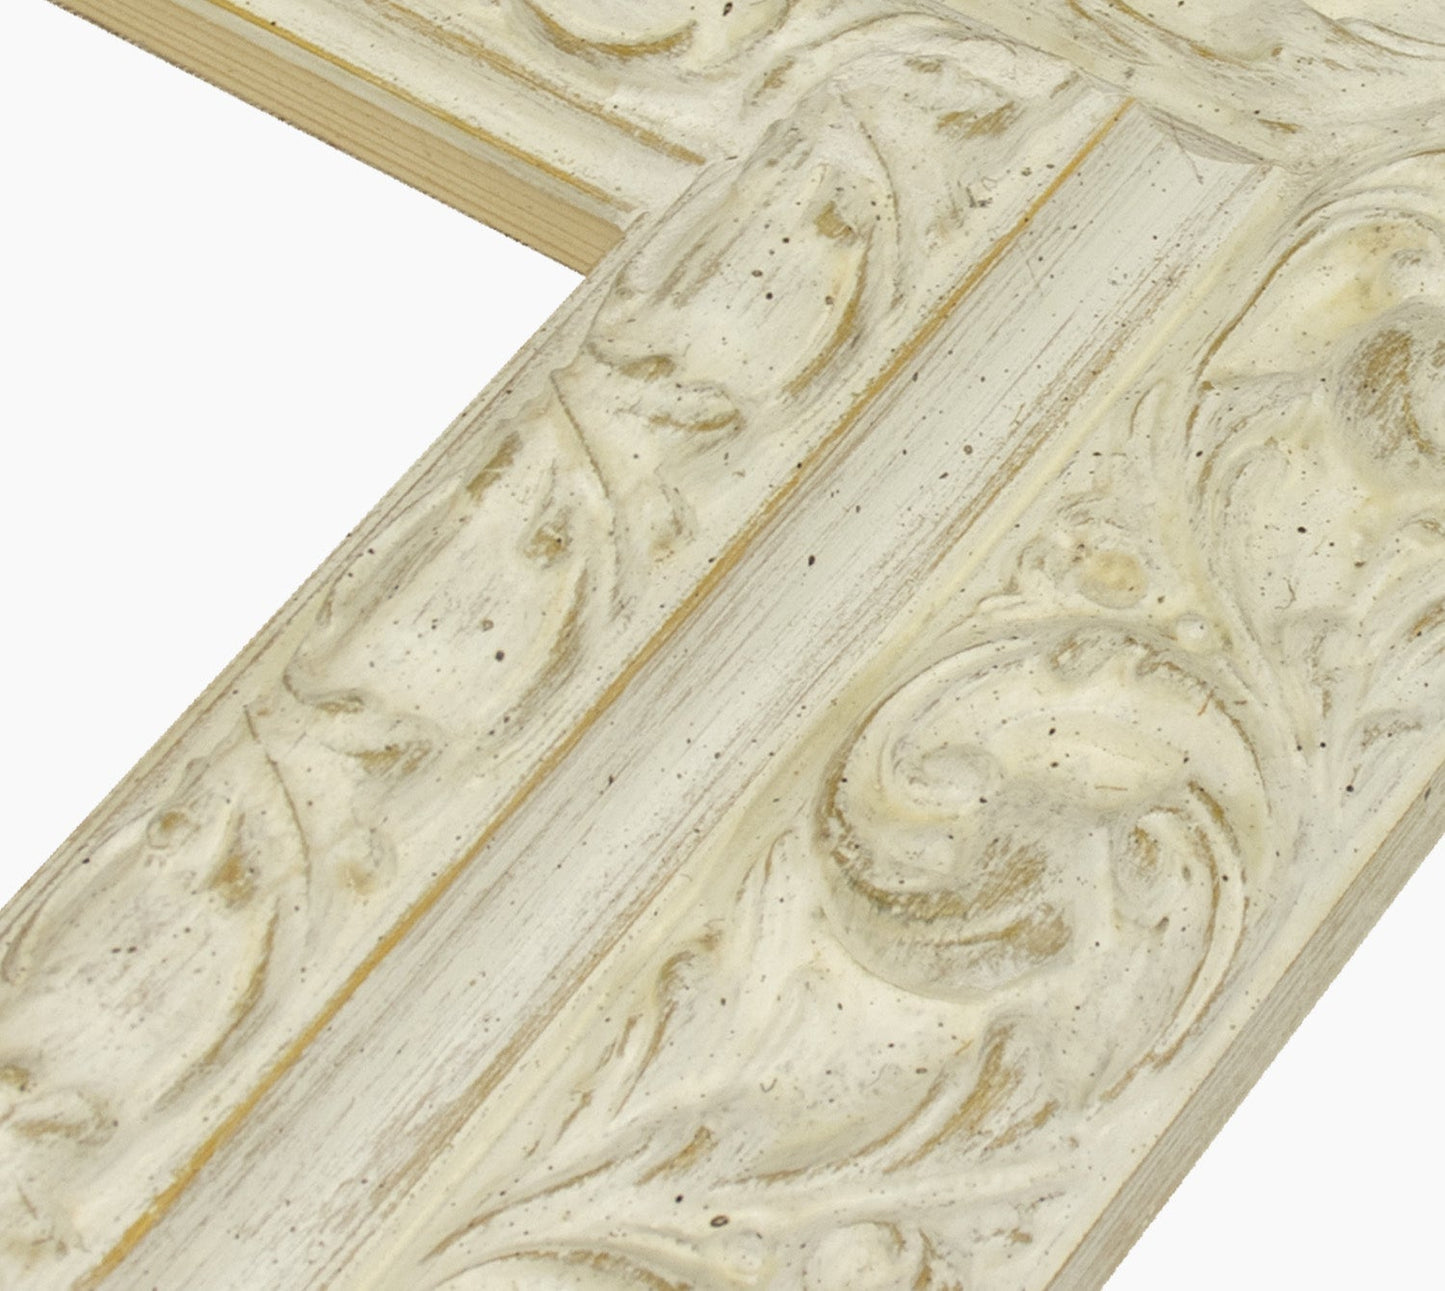 793.915 cadre en bois à fond ocre blanc mesure de profil 93x45 mm Lombarda cornici S.n.c.